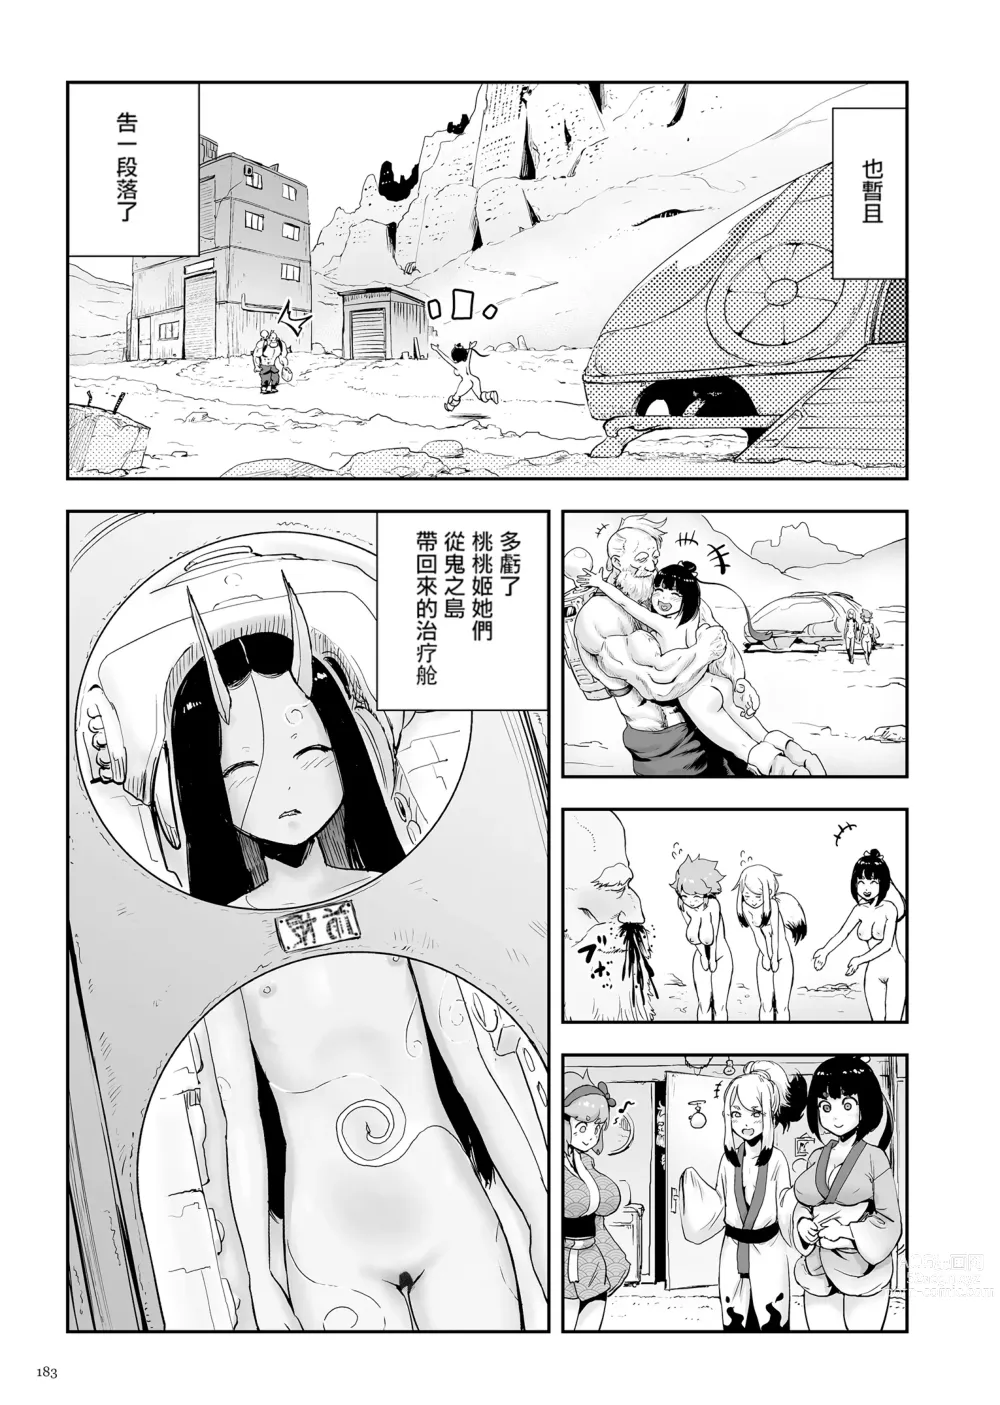 Page 183 of manga 桃桃姬